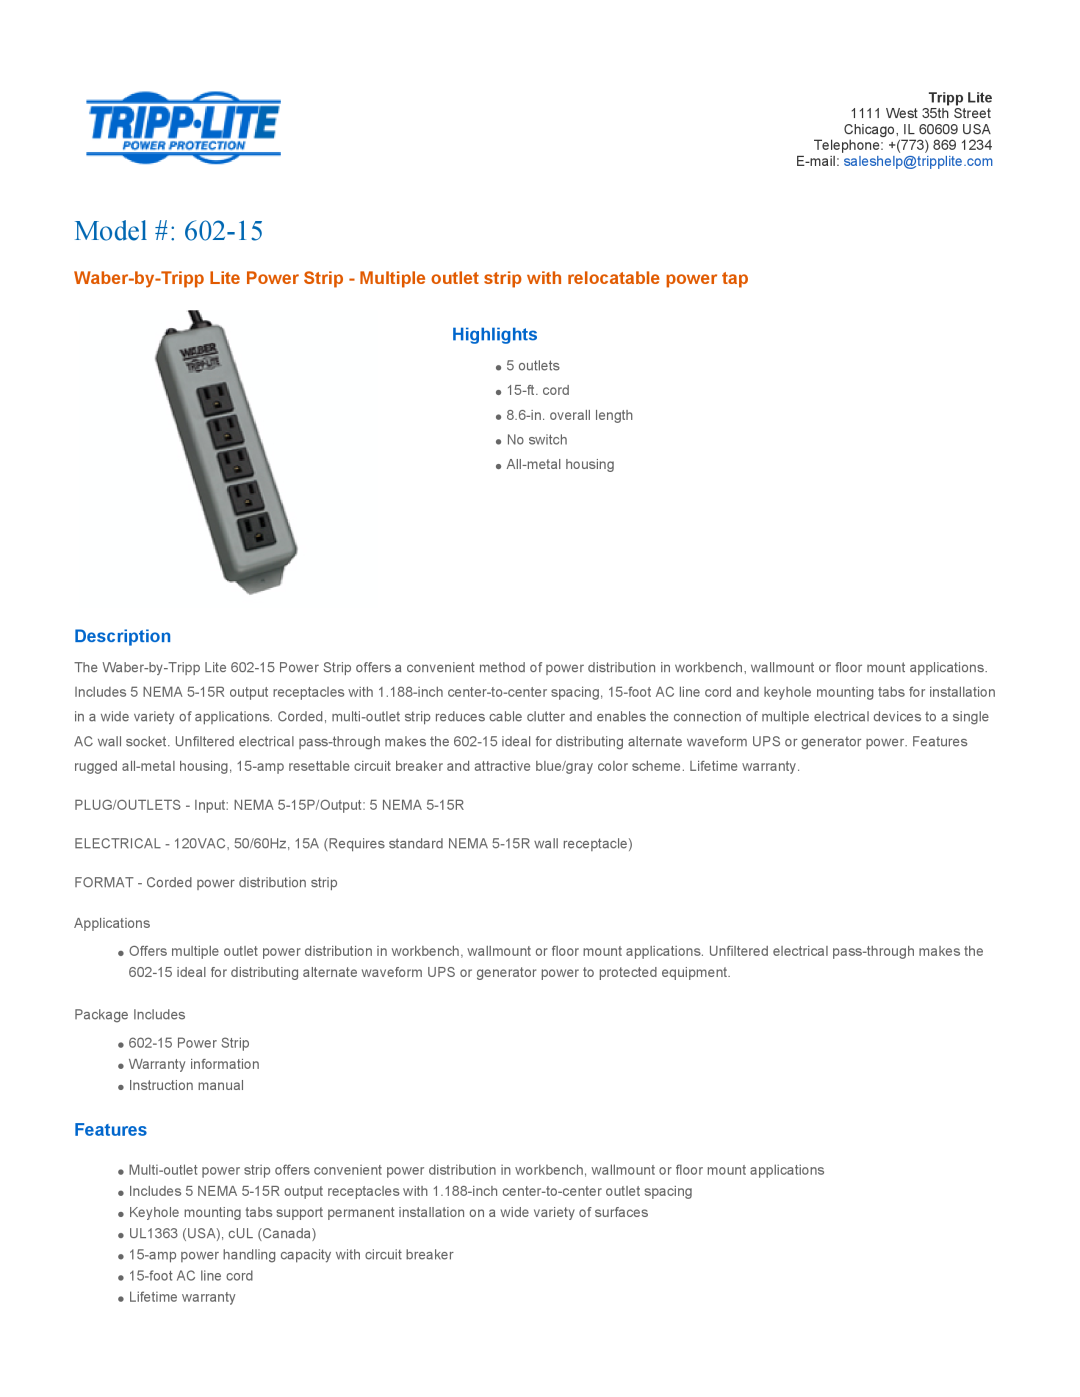 Tripp Lite 602-15 warranty Highlights, Description, Features, Model # 